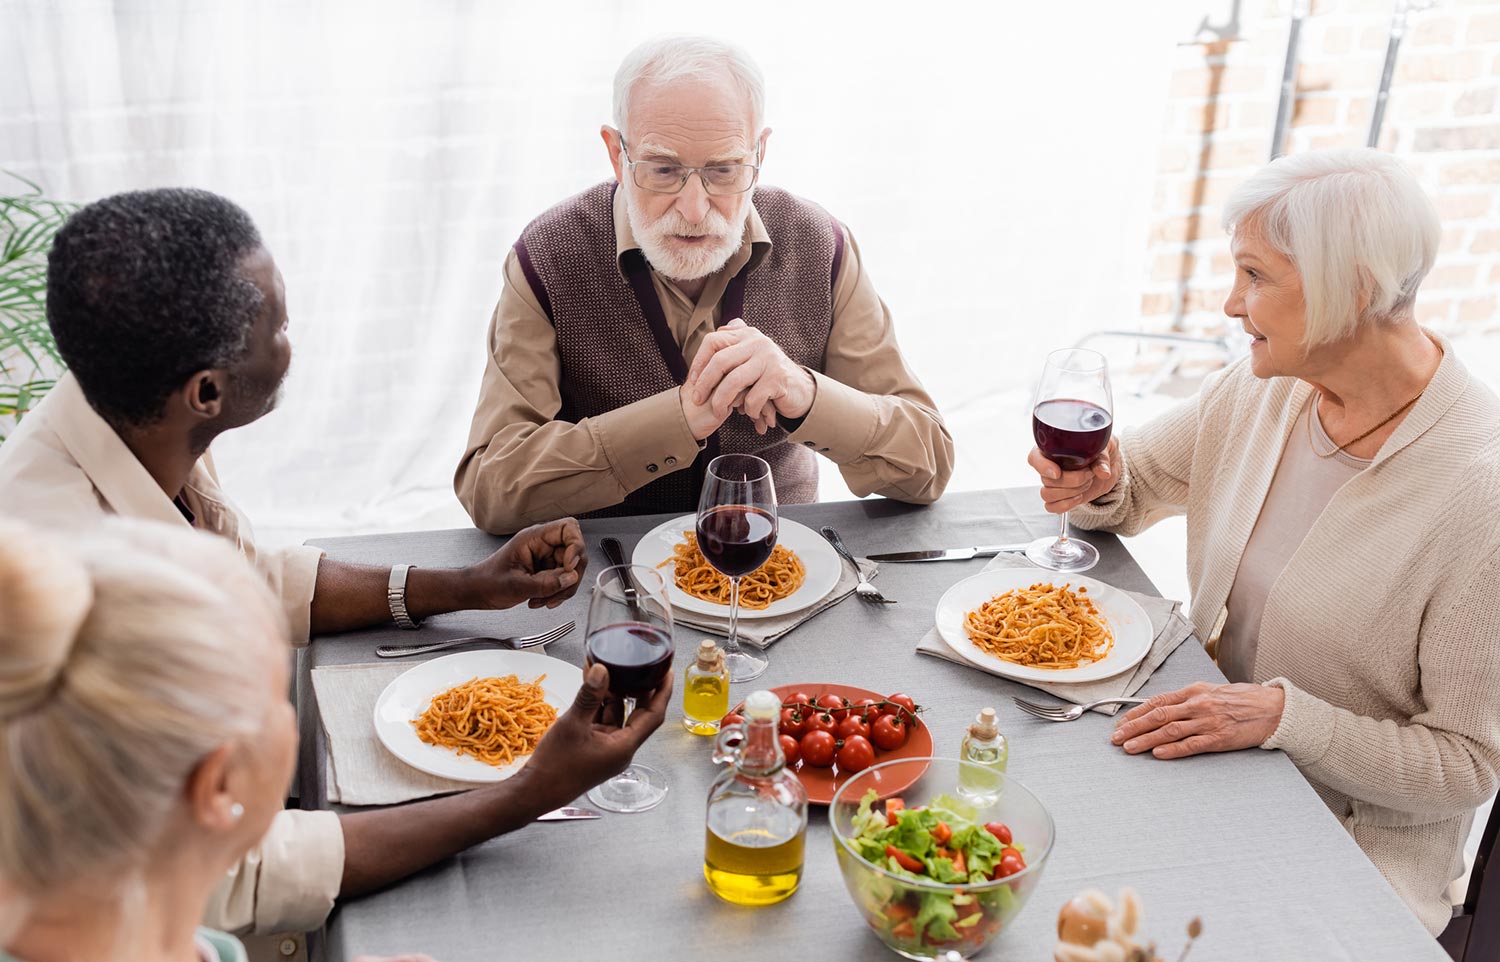 Elderly people dining